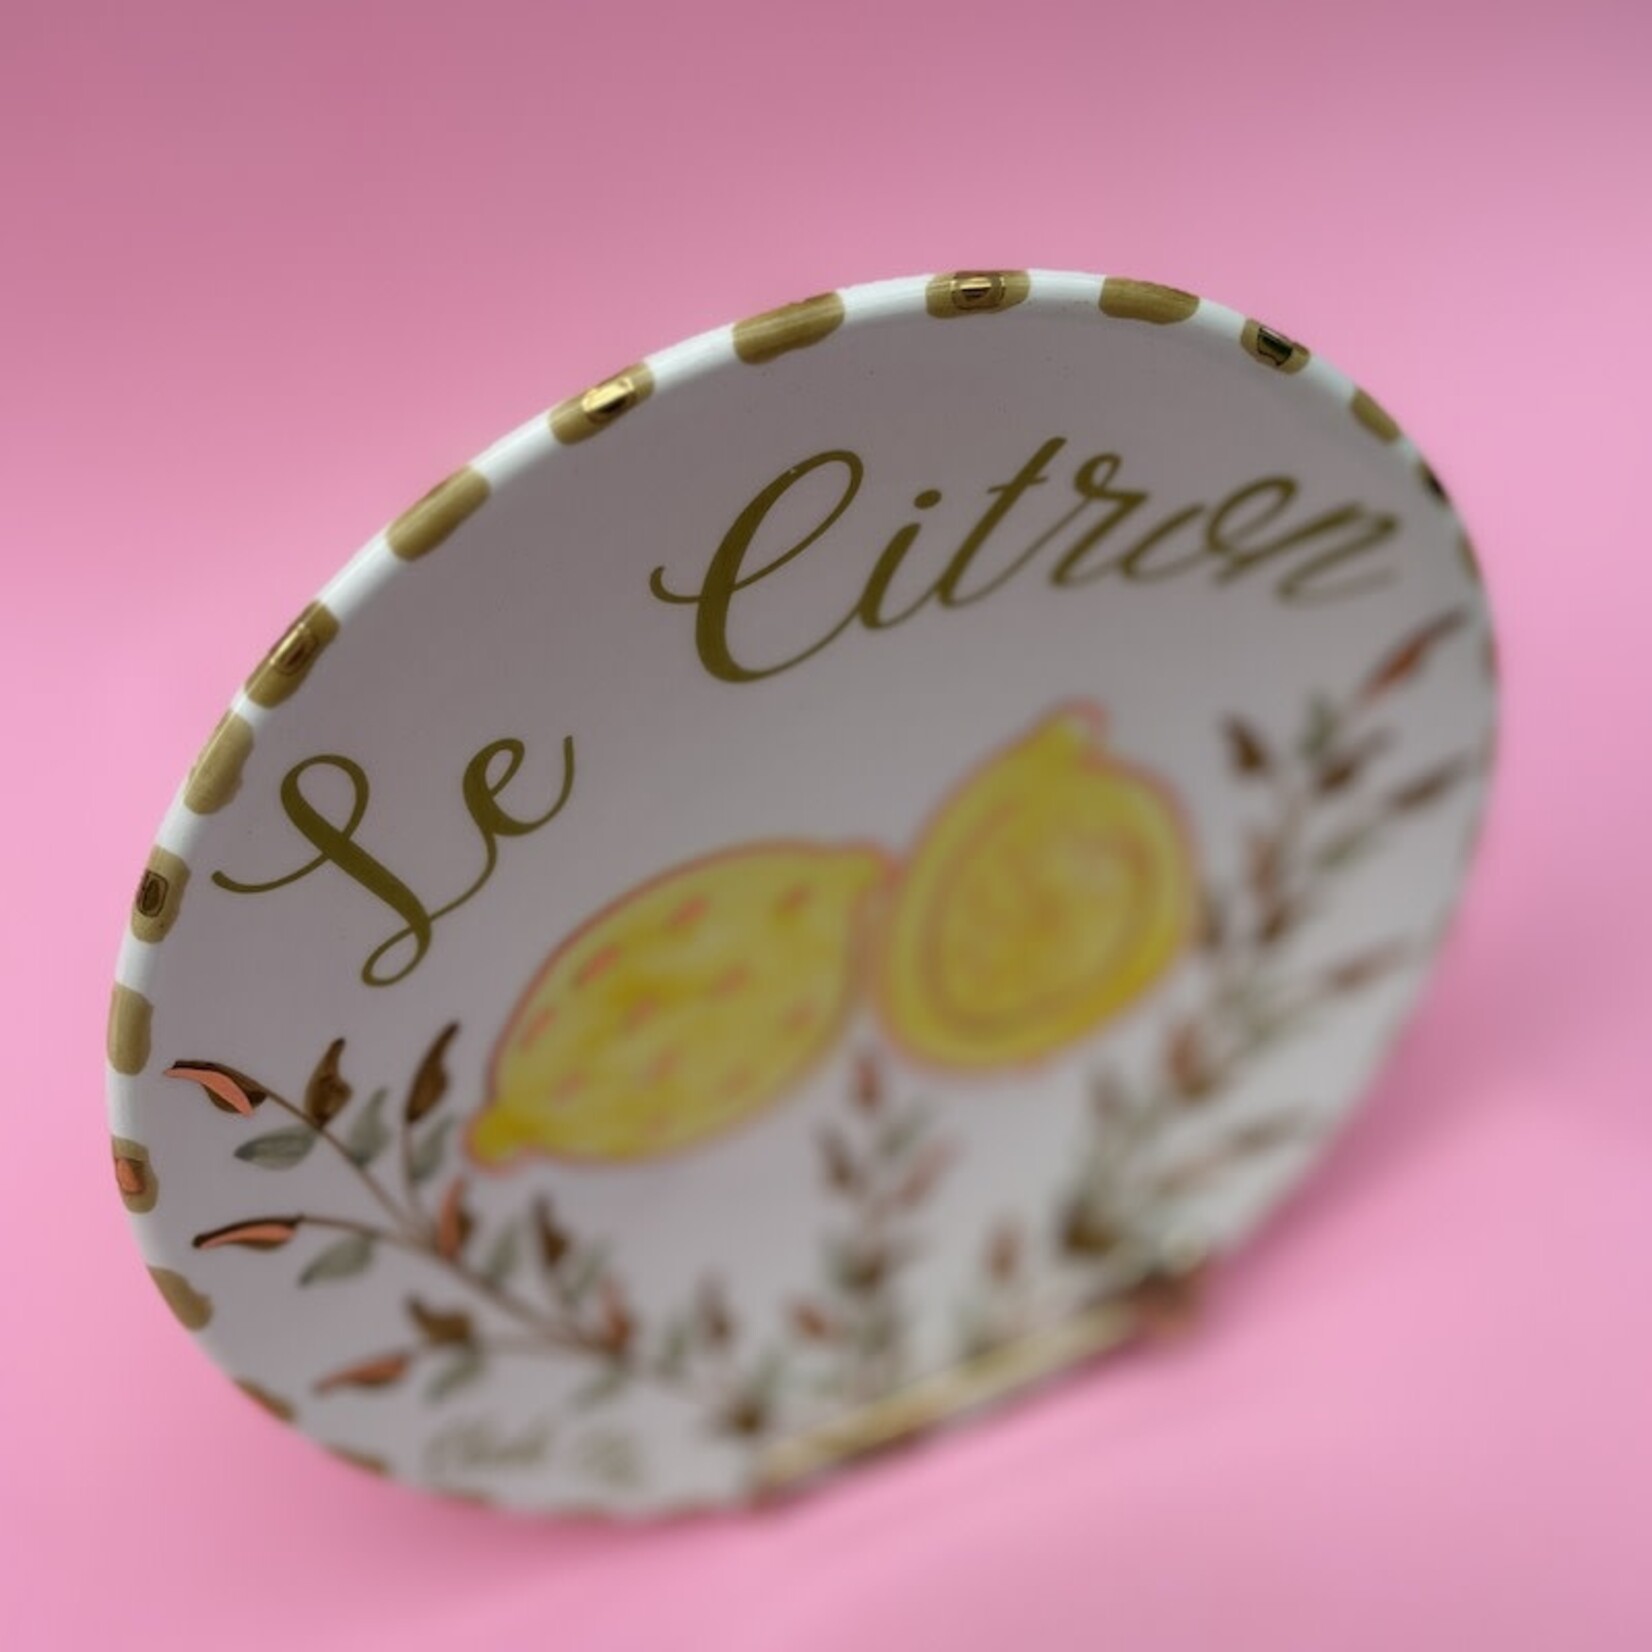 Chabi Chic Chabi Chic - fruitborden - Le Citron